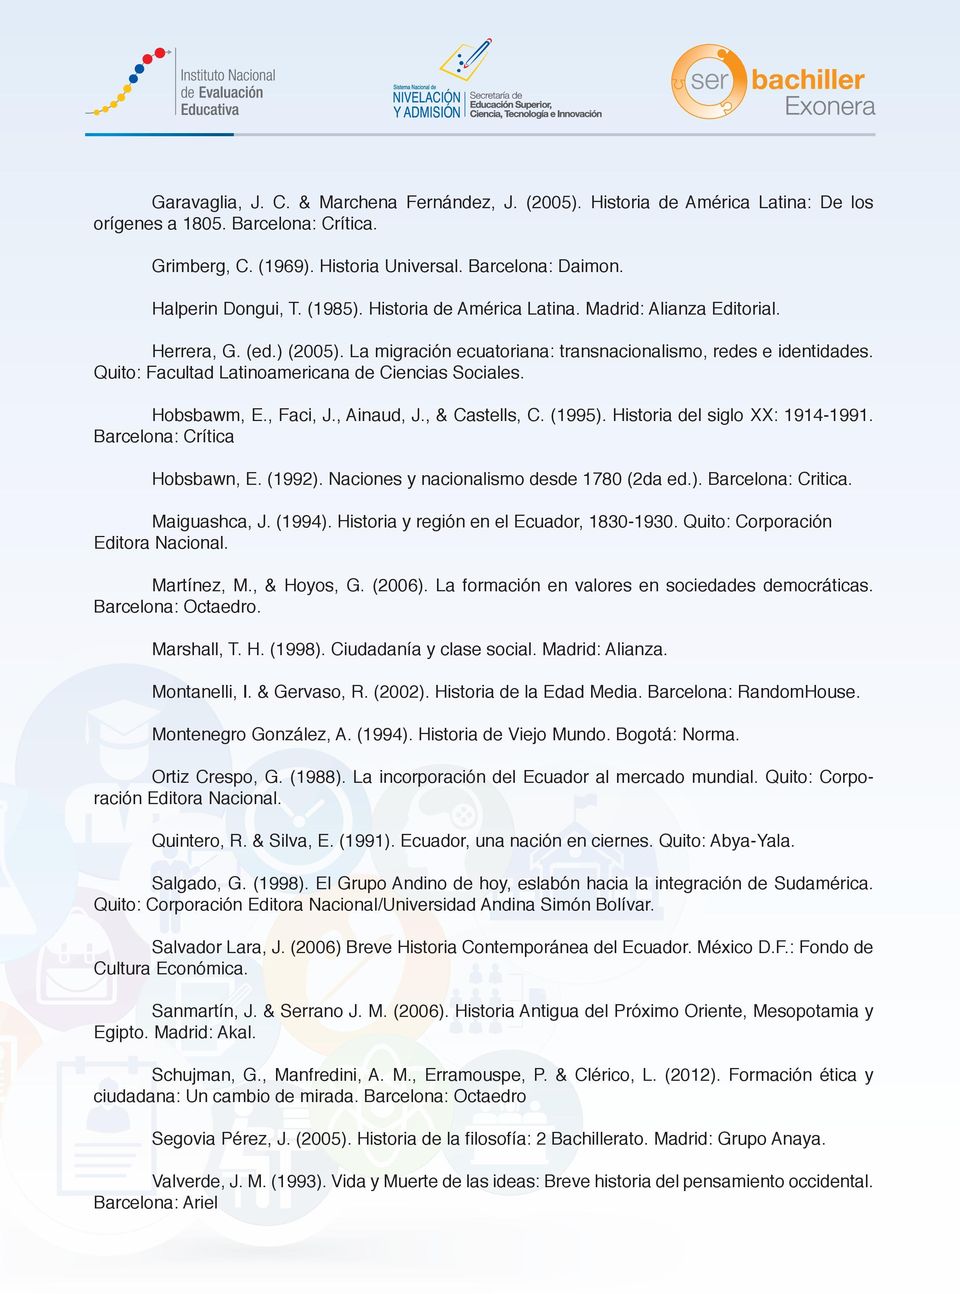 Quito: Facultad Latinoamericana de Ciencias Sociales. Hobsbawm, E., Faci, J., Ainaud, J., & Castells, C. (1995). Historia del siglo XX: 1914-1991. Barcelona: Crítica Hobsbawn, E. (1992).